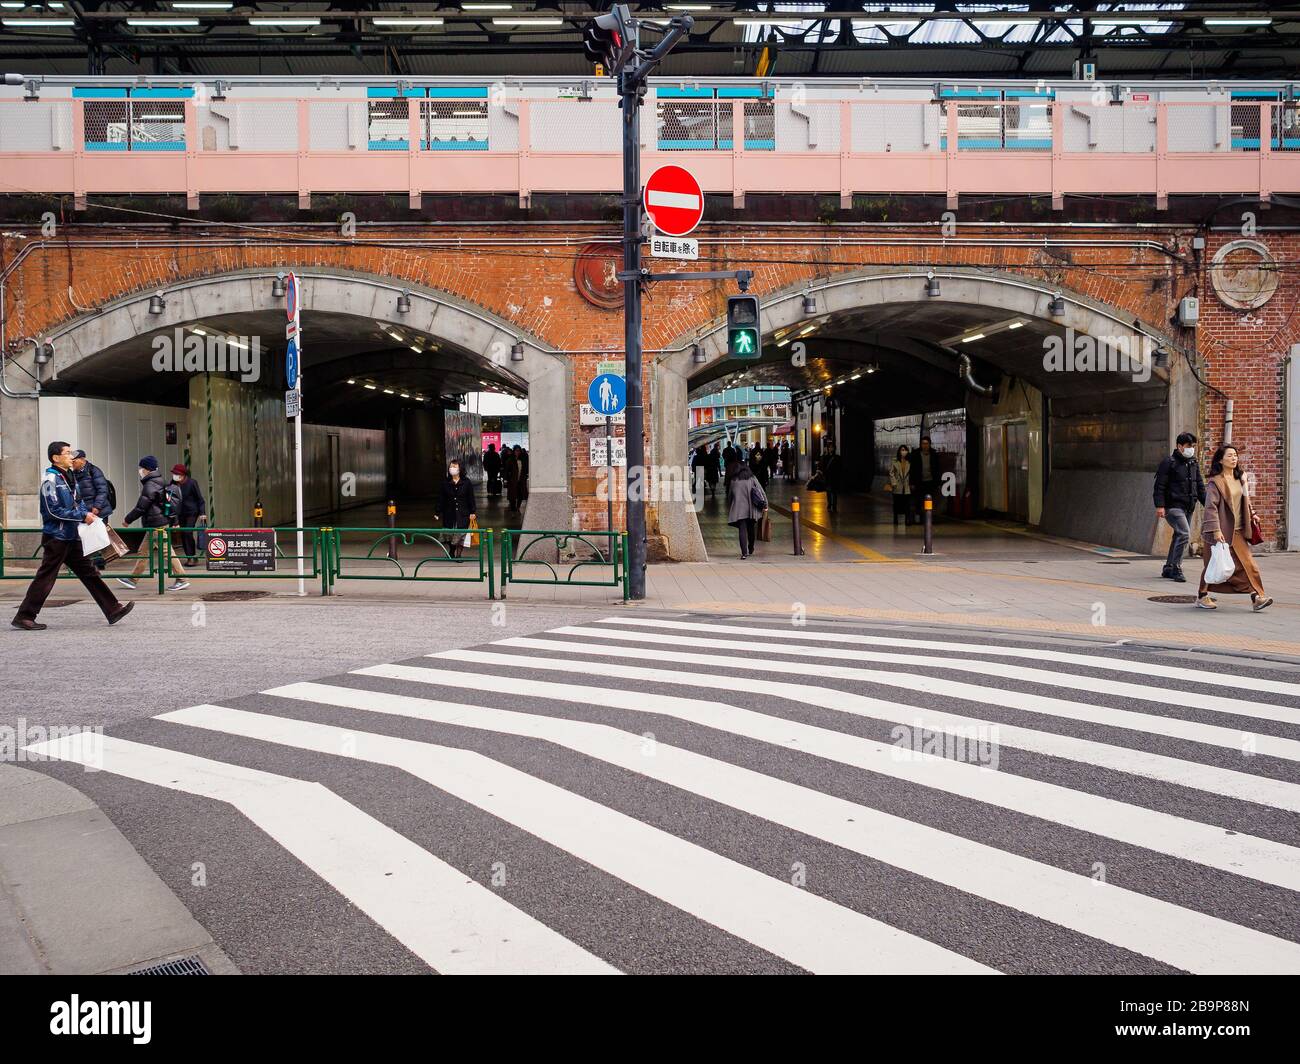 Railway arches and pedestrian crossing at Yurakucho Station, Tokyo, Japan. Stock Photo